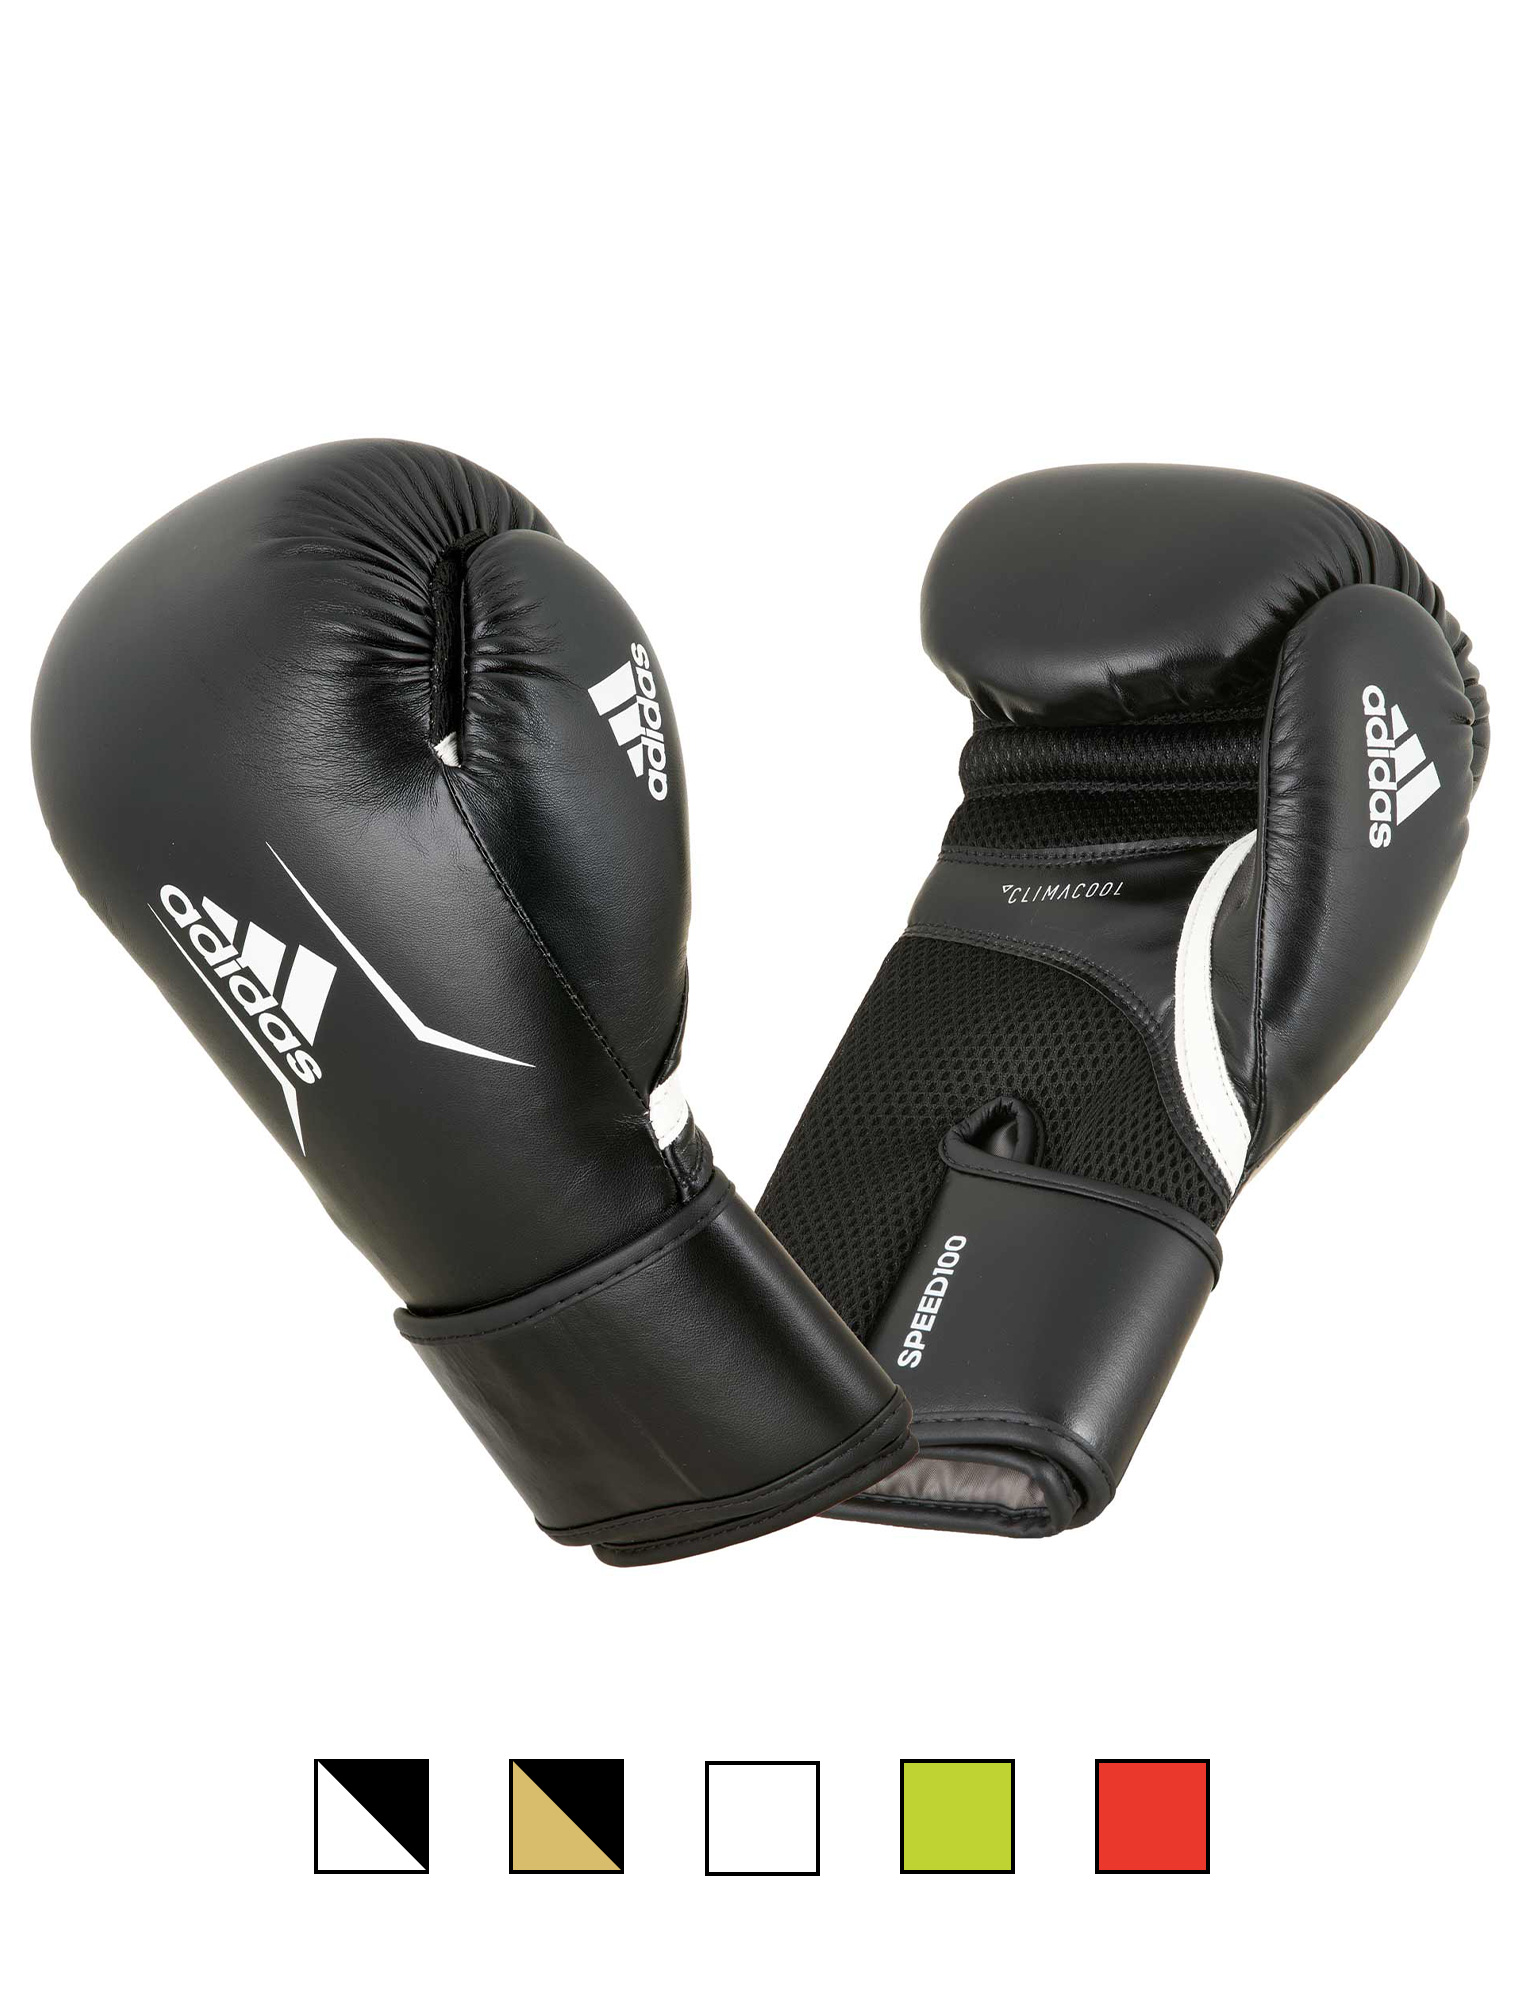 adidas boxing glove Speed 100 ADISBG100, black/white